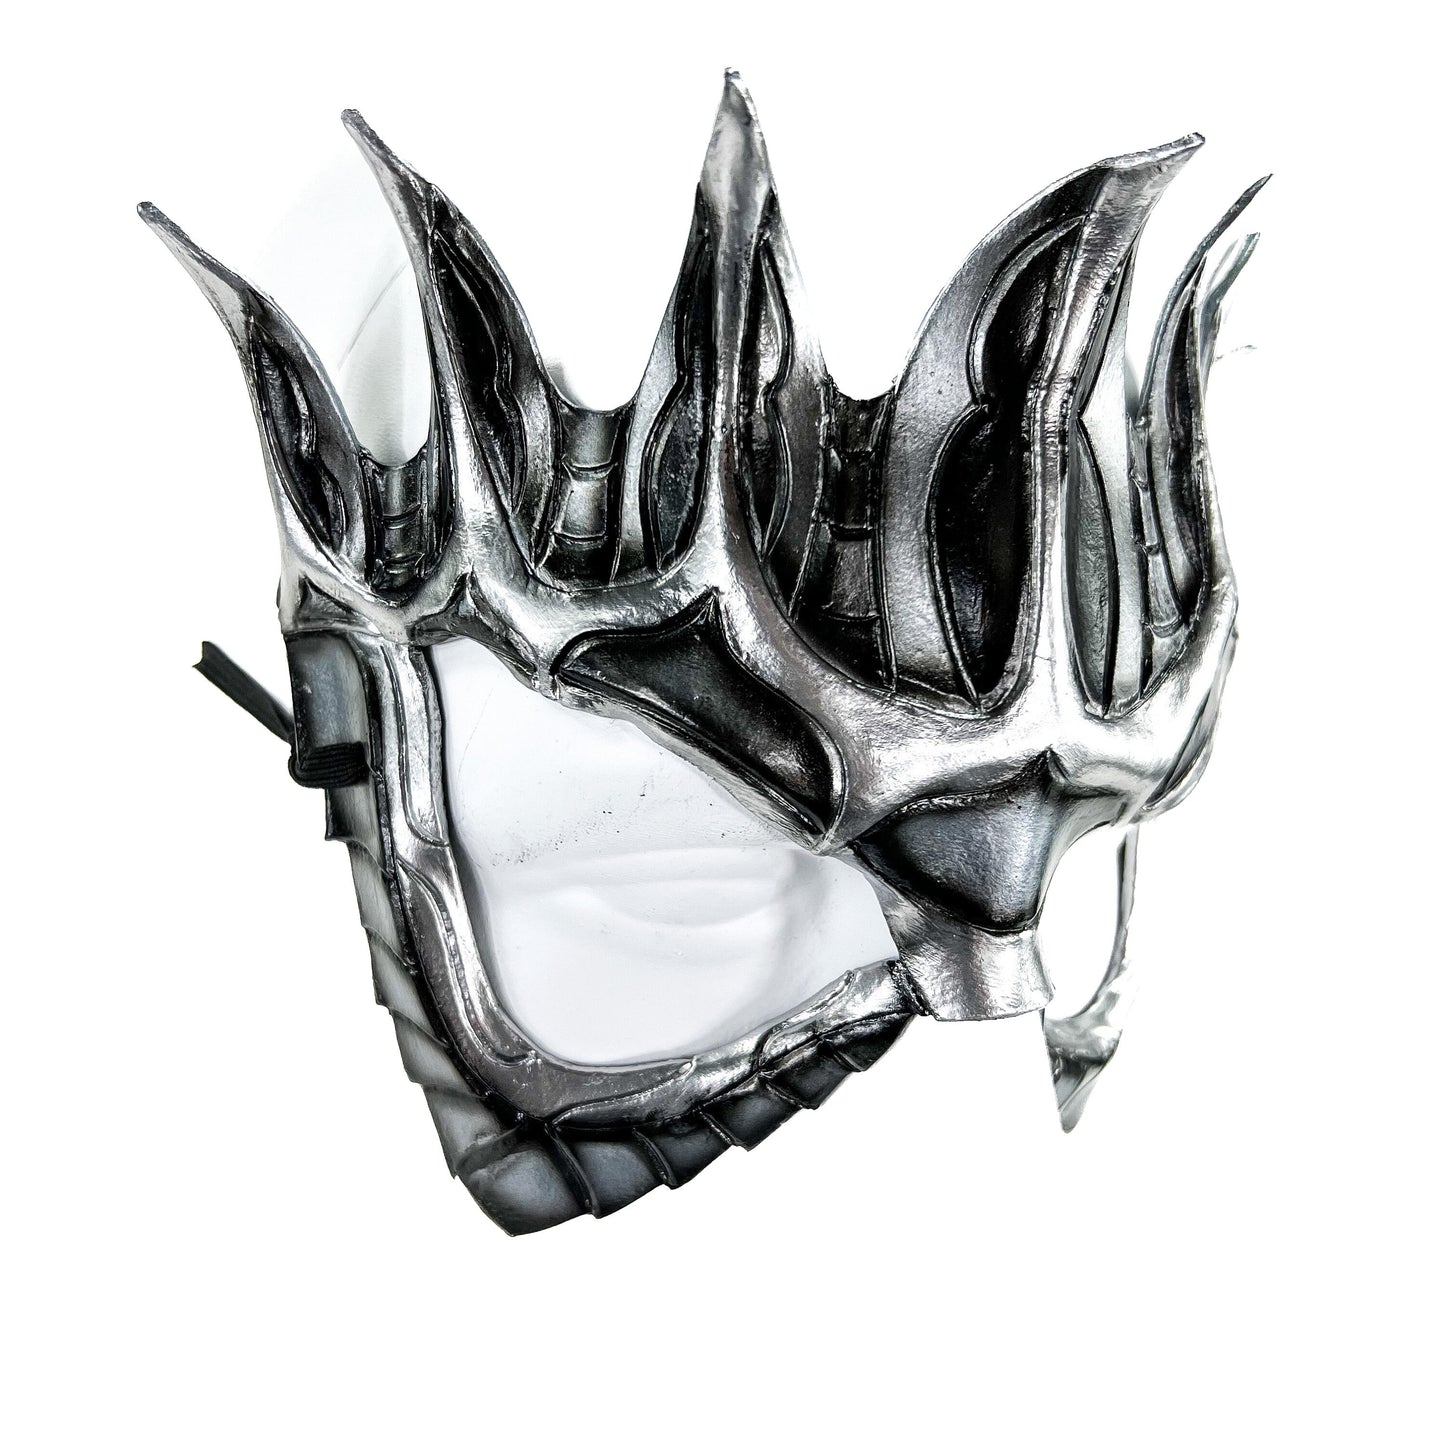 Masquerade Crown Mask of Handmade Genuine Leather in Metallics